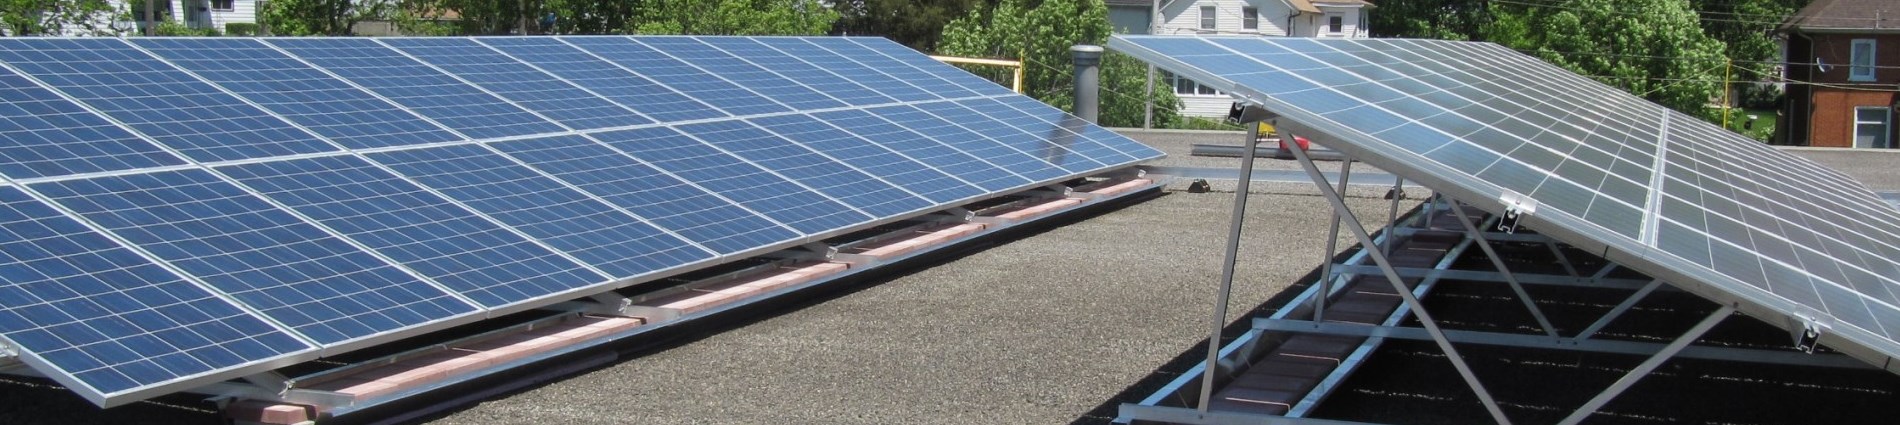 Rooftop solar panels on Transit building